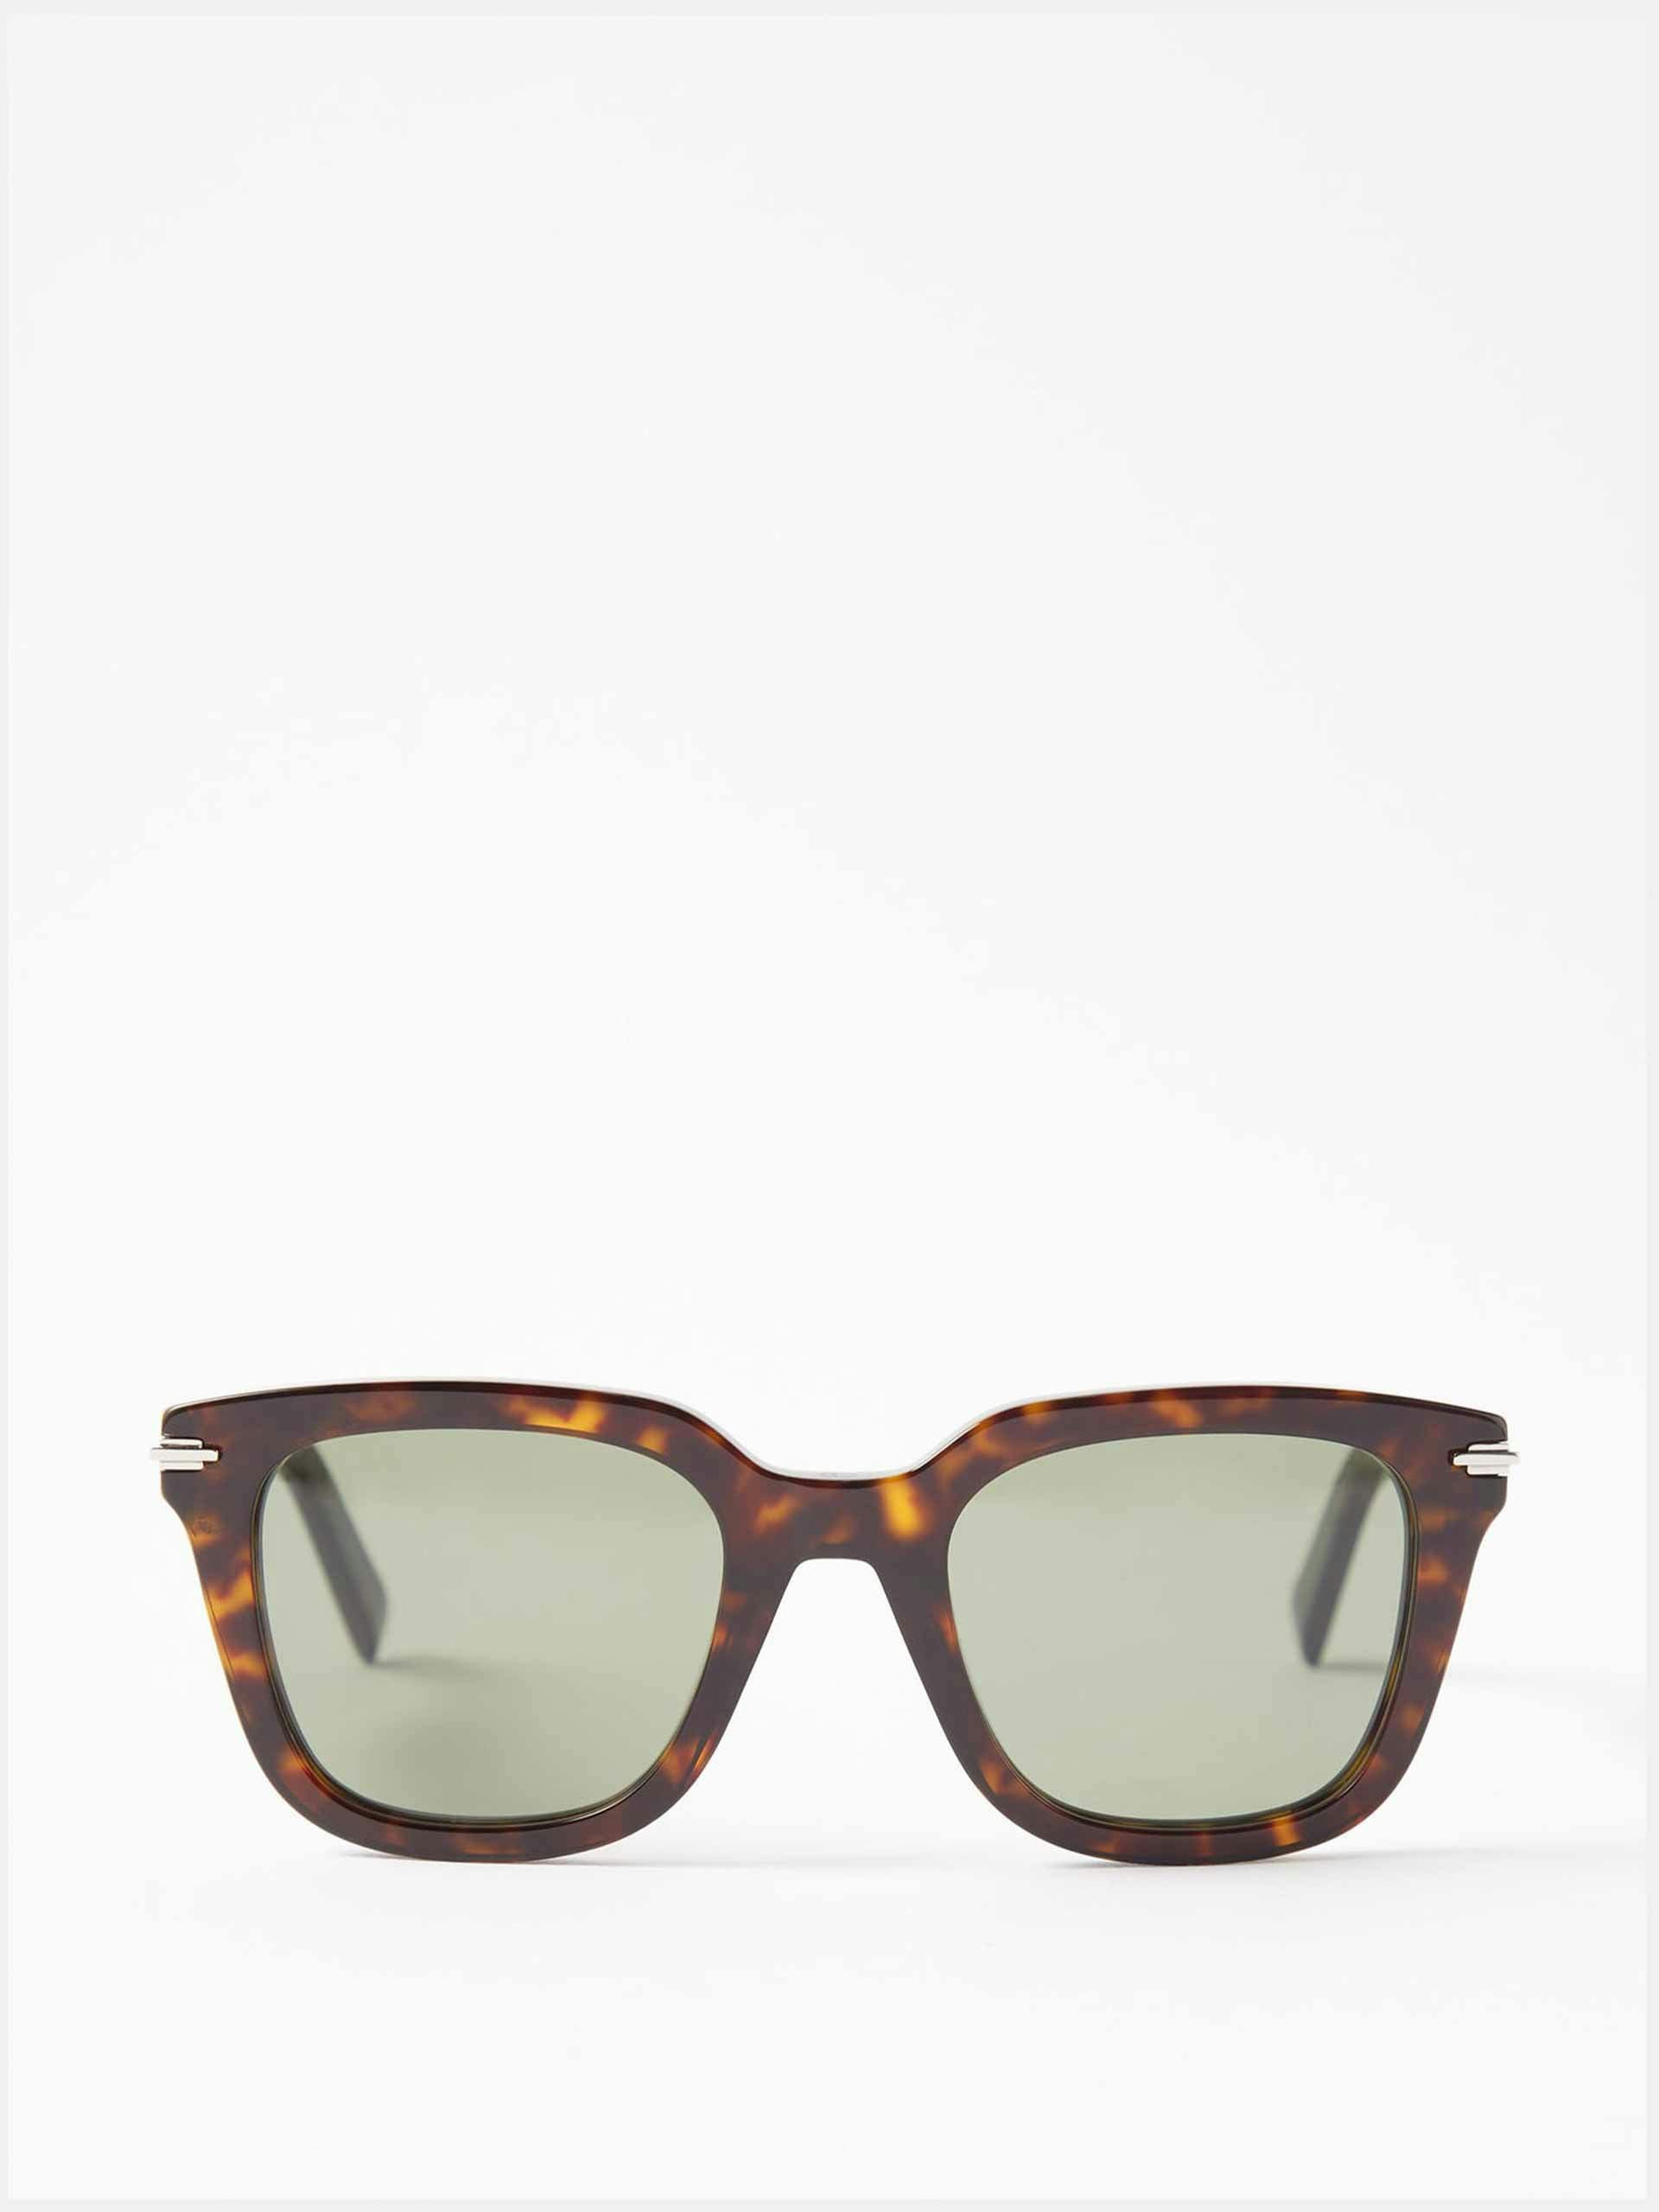 Tortoiseshell and acetate sunglasses